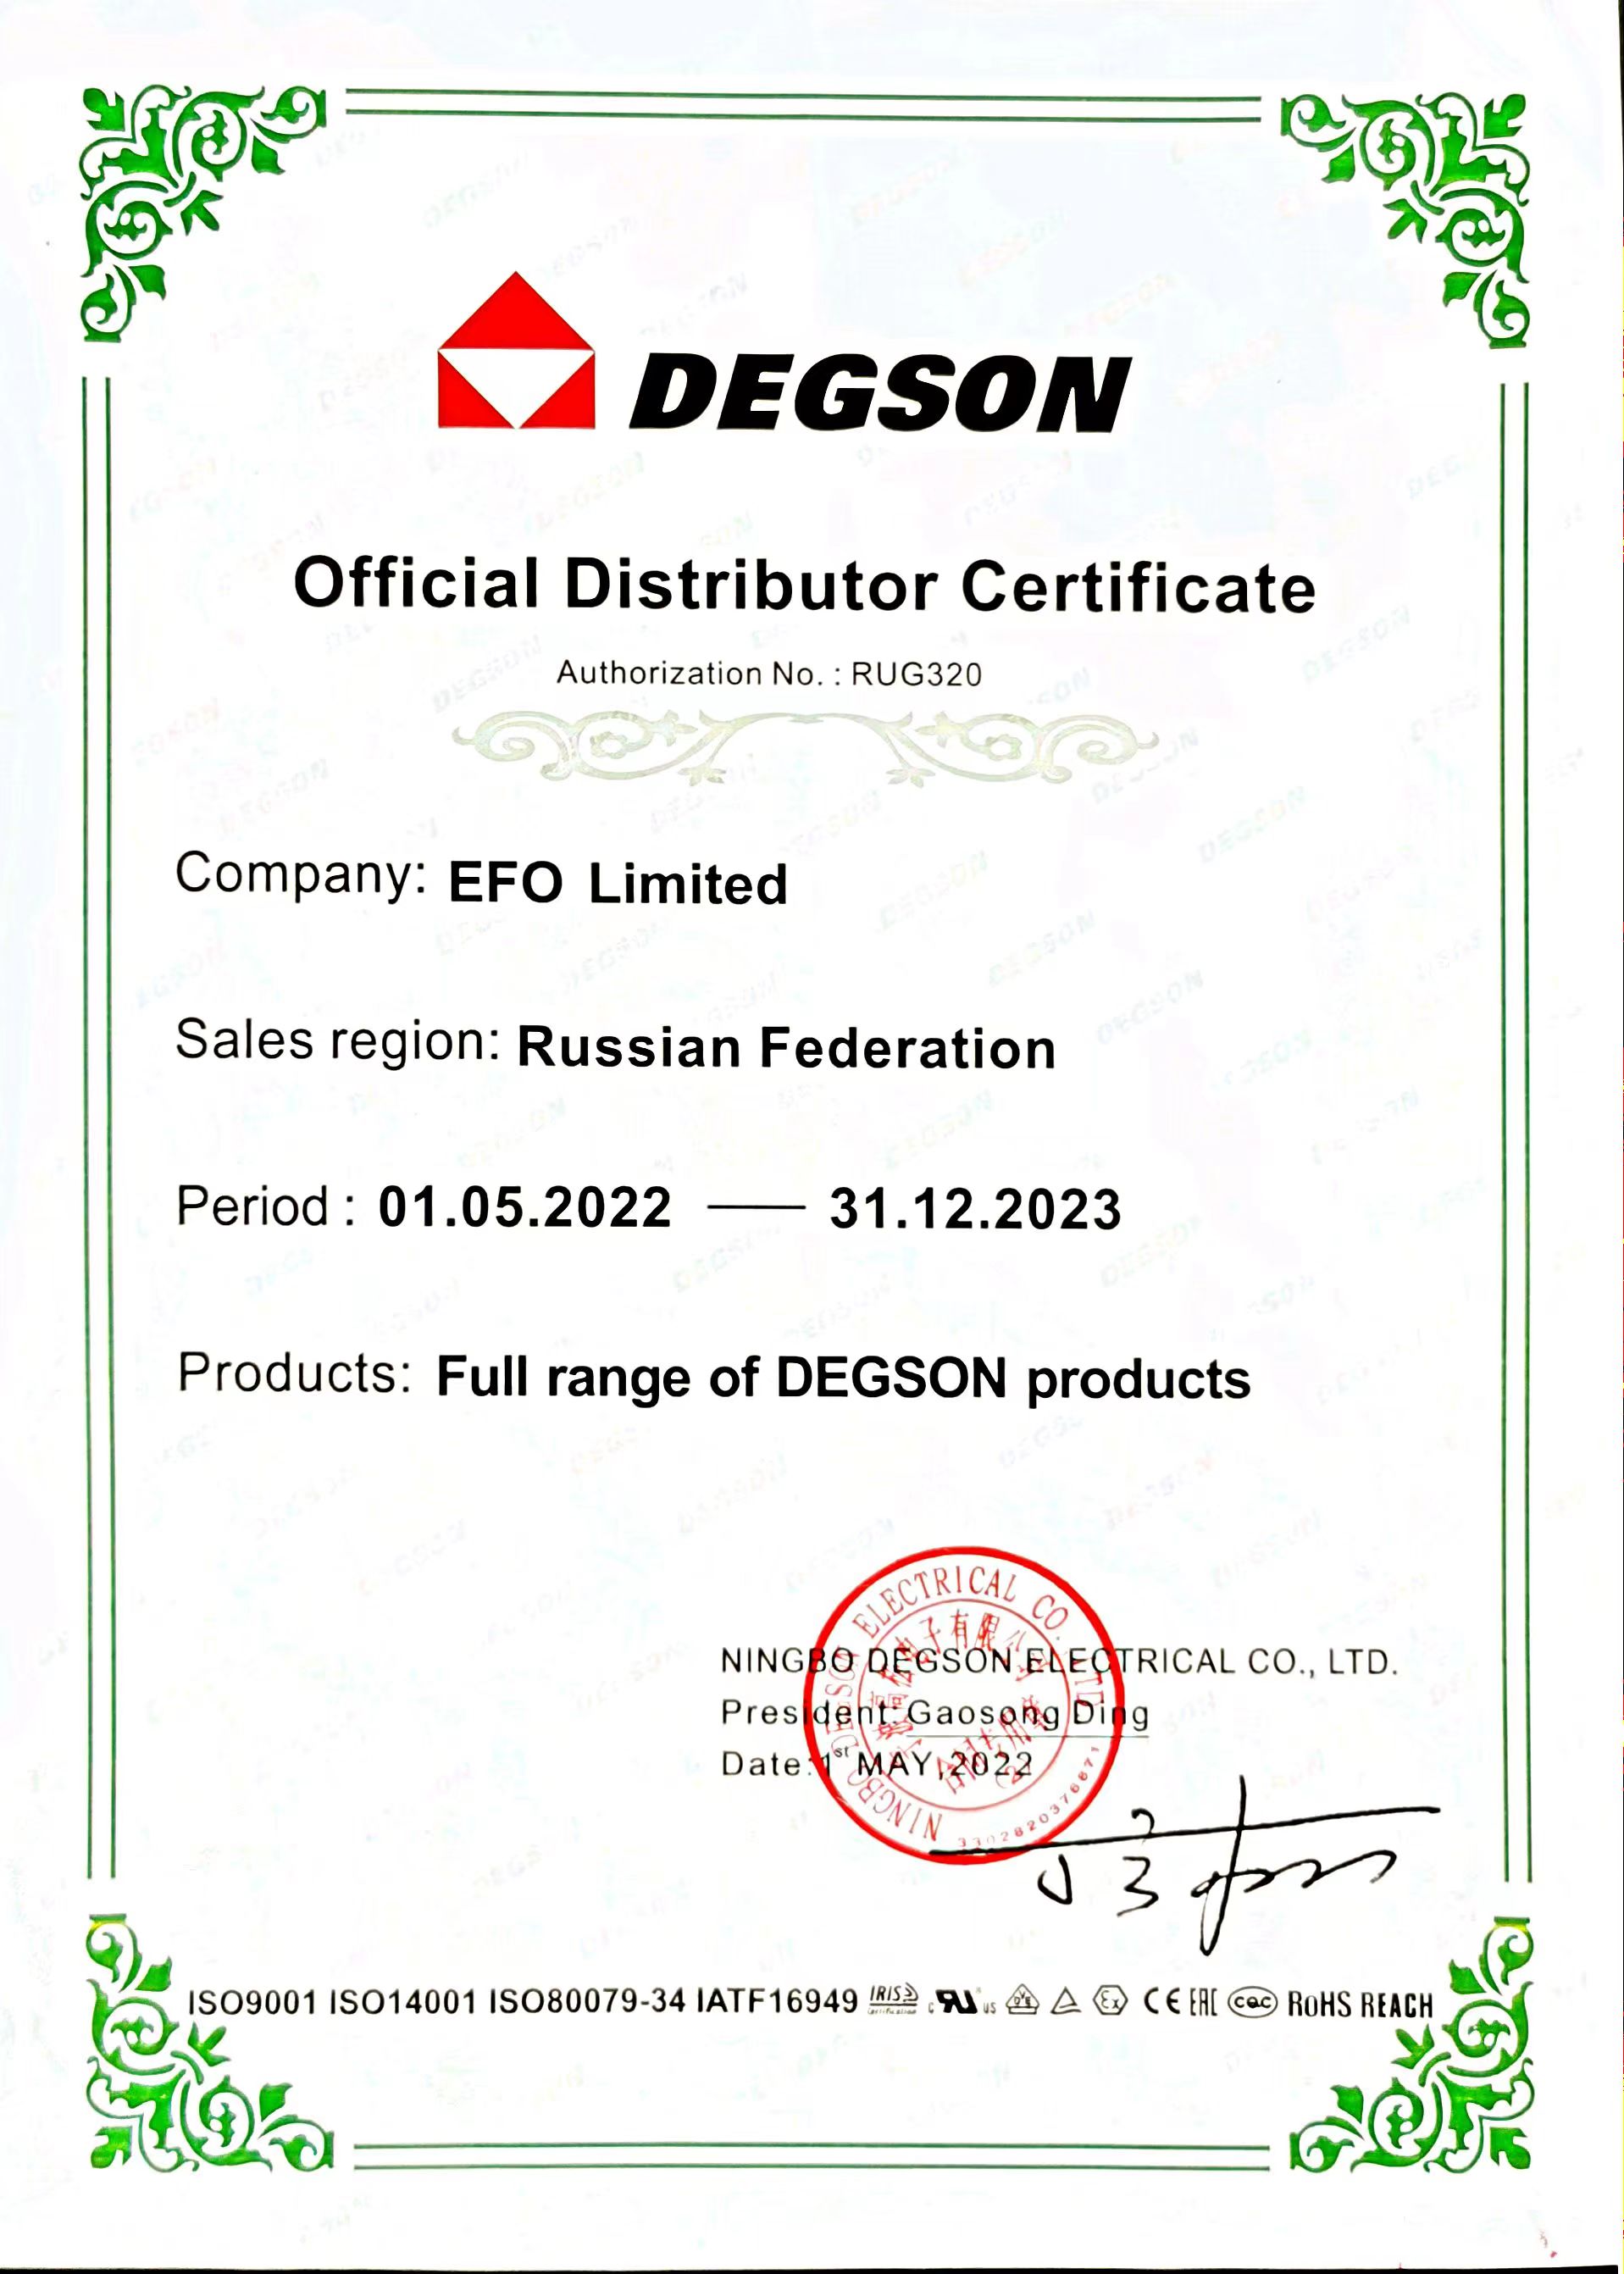 Сертификат официального дистрибьютора DEGSON